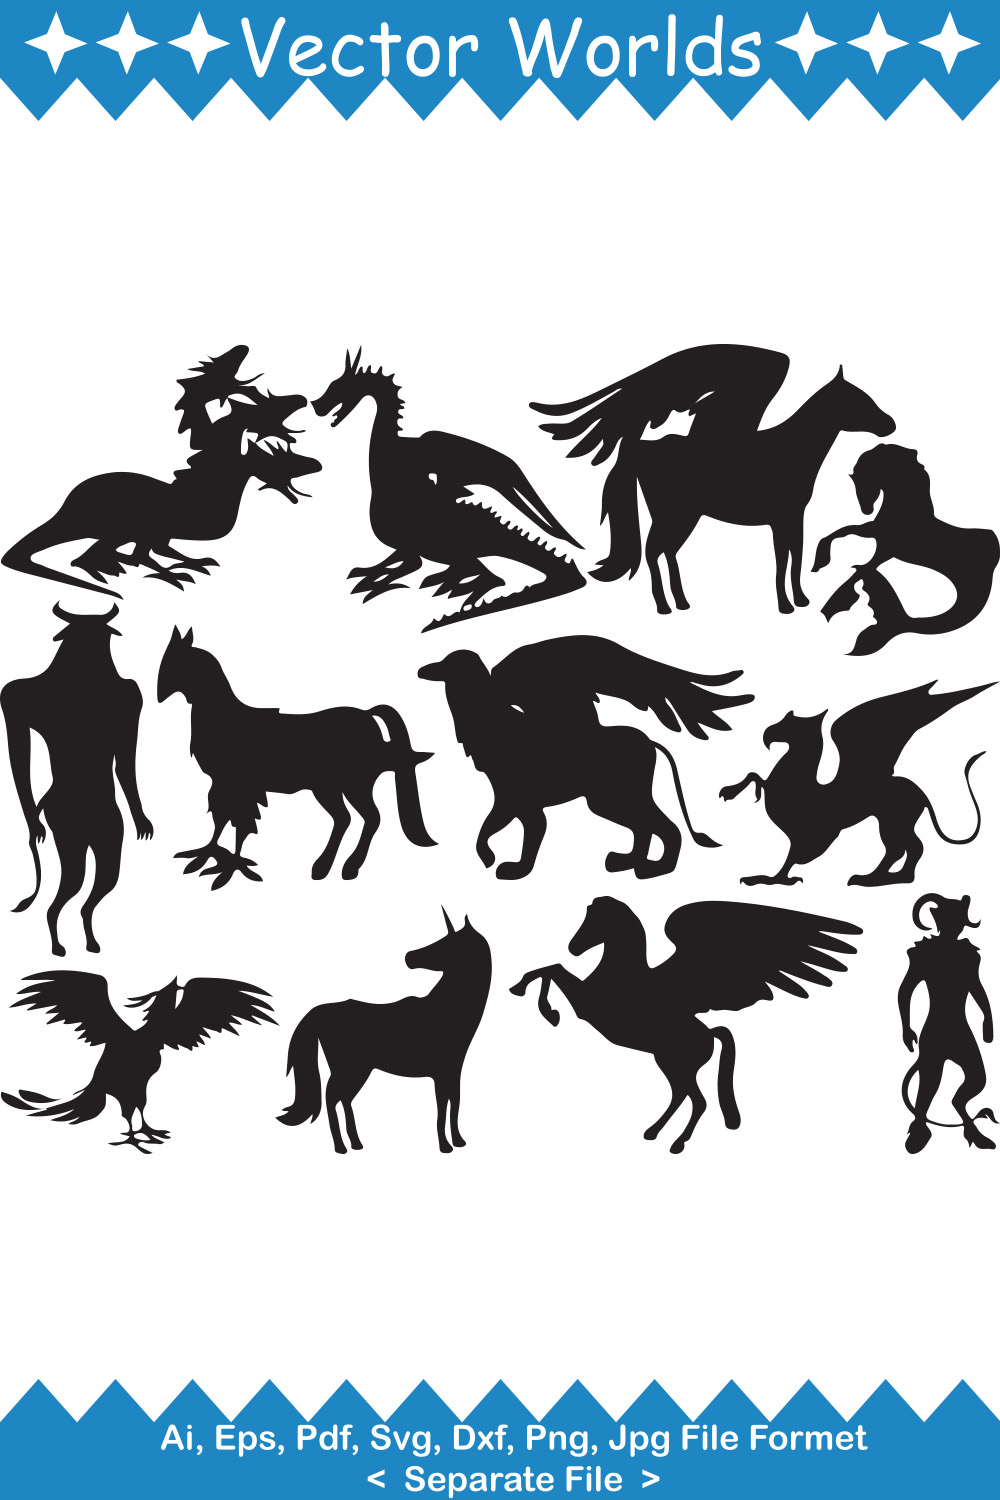 Set of beautiful images of unicorn dragon silhouettes